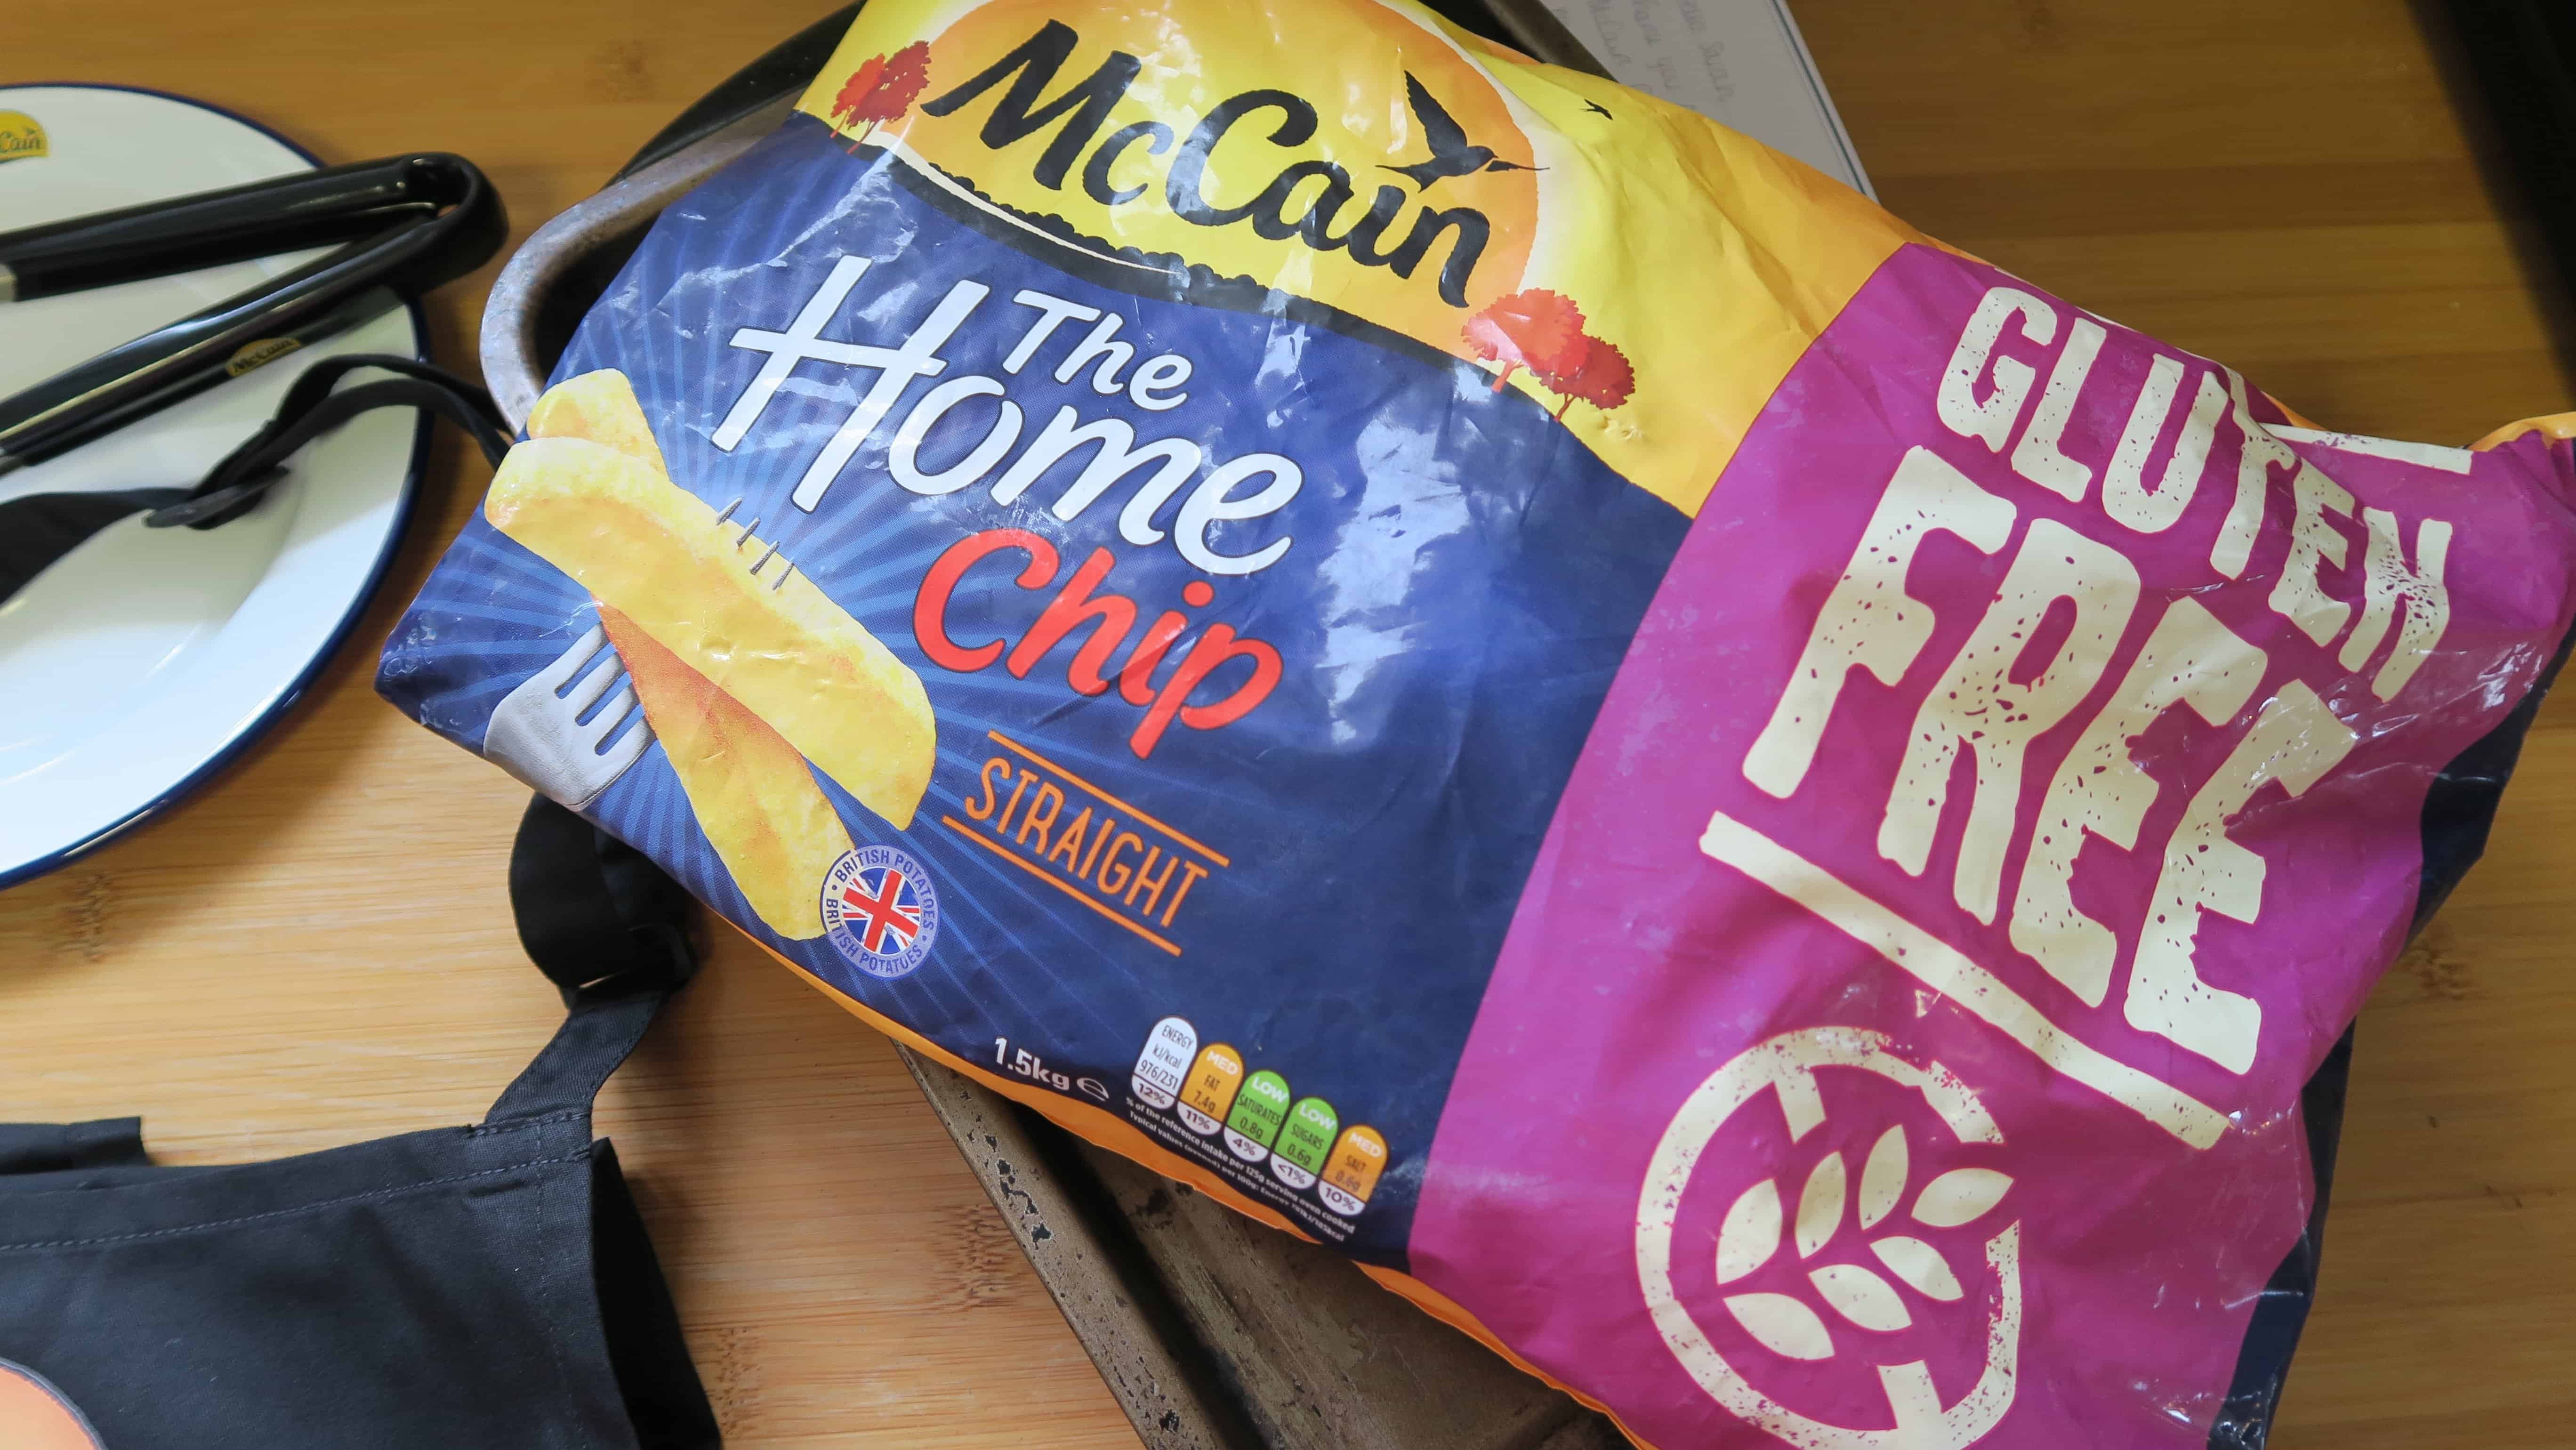 mccain gluten free home chips